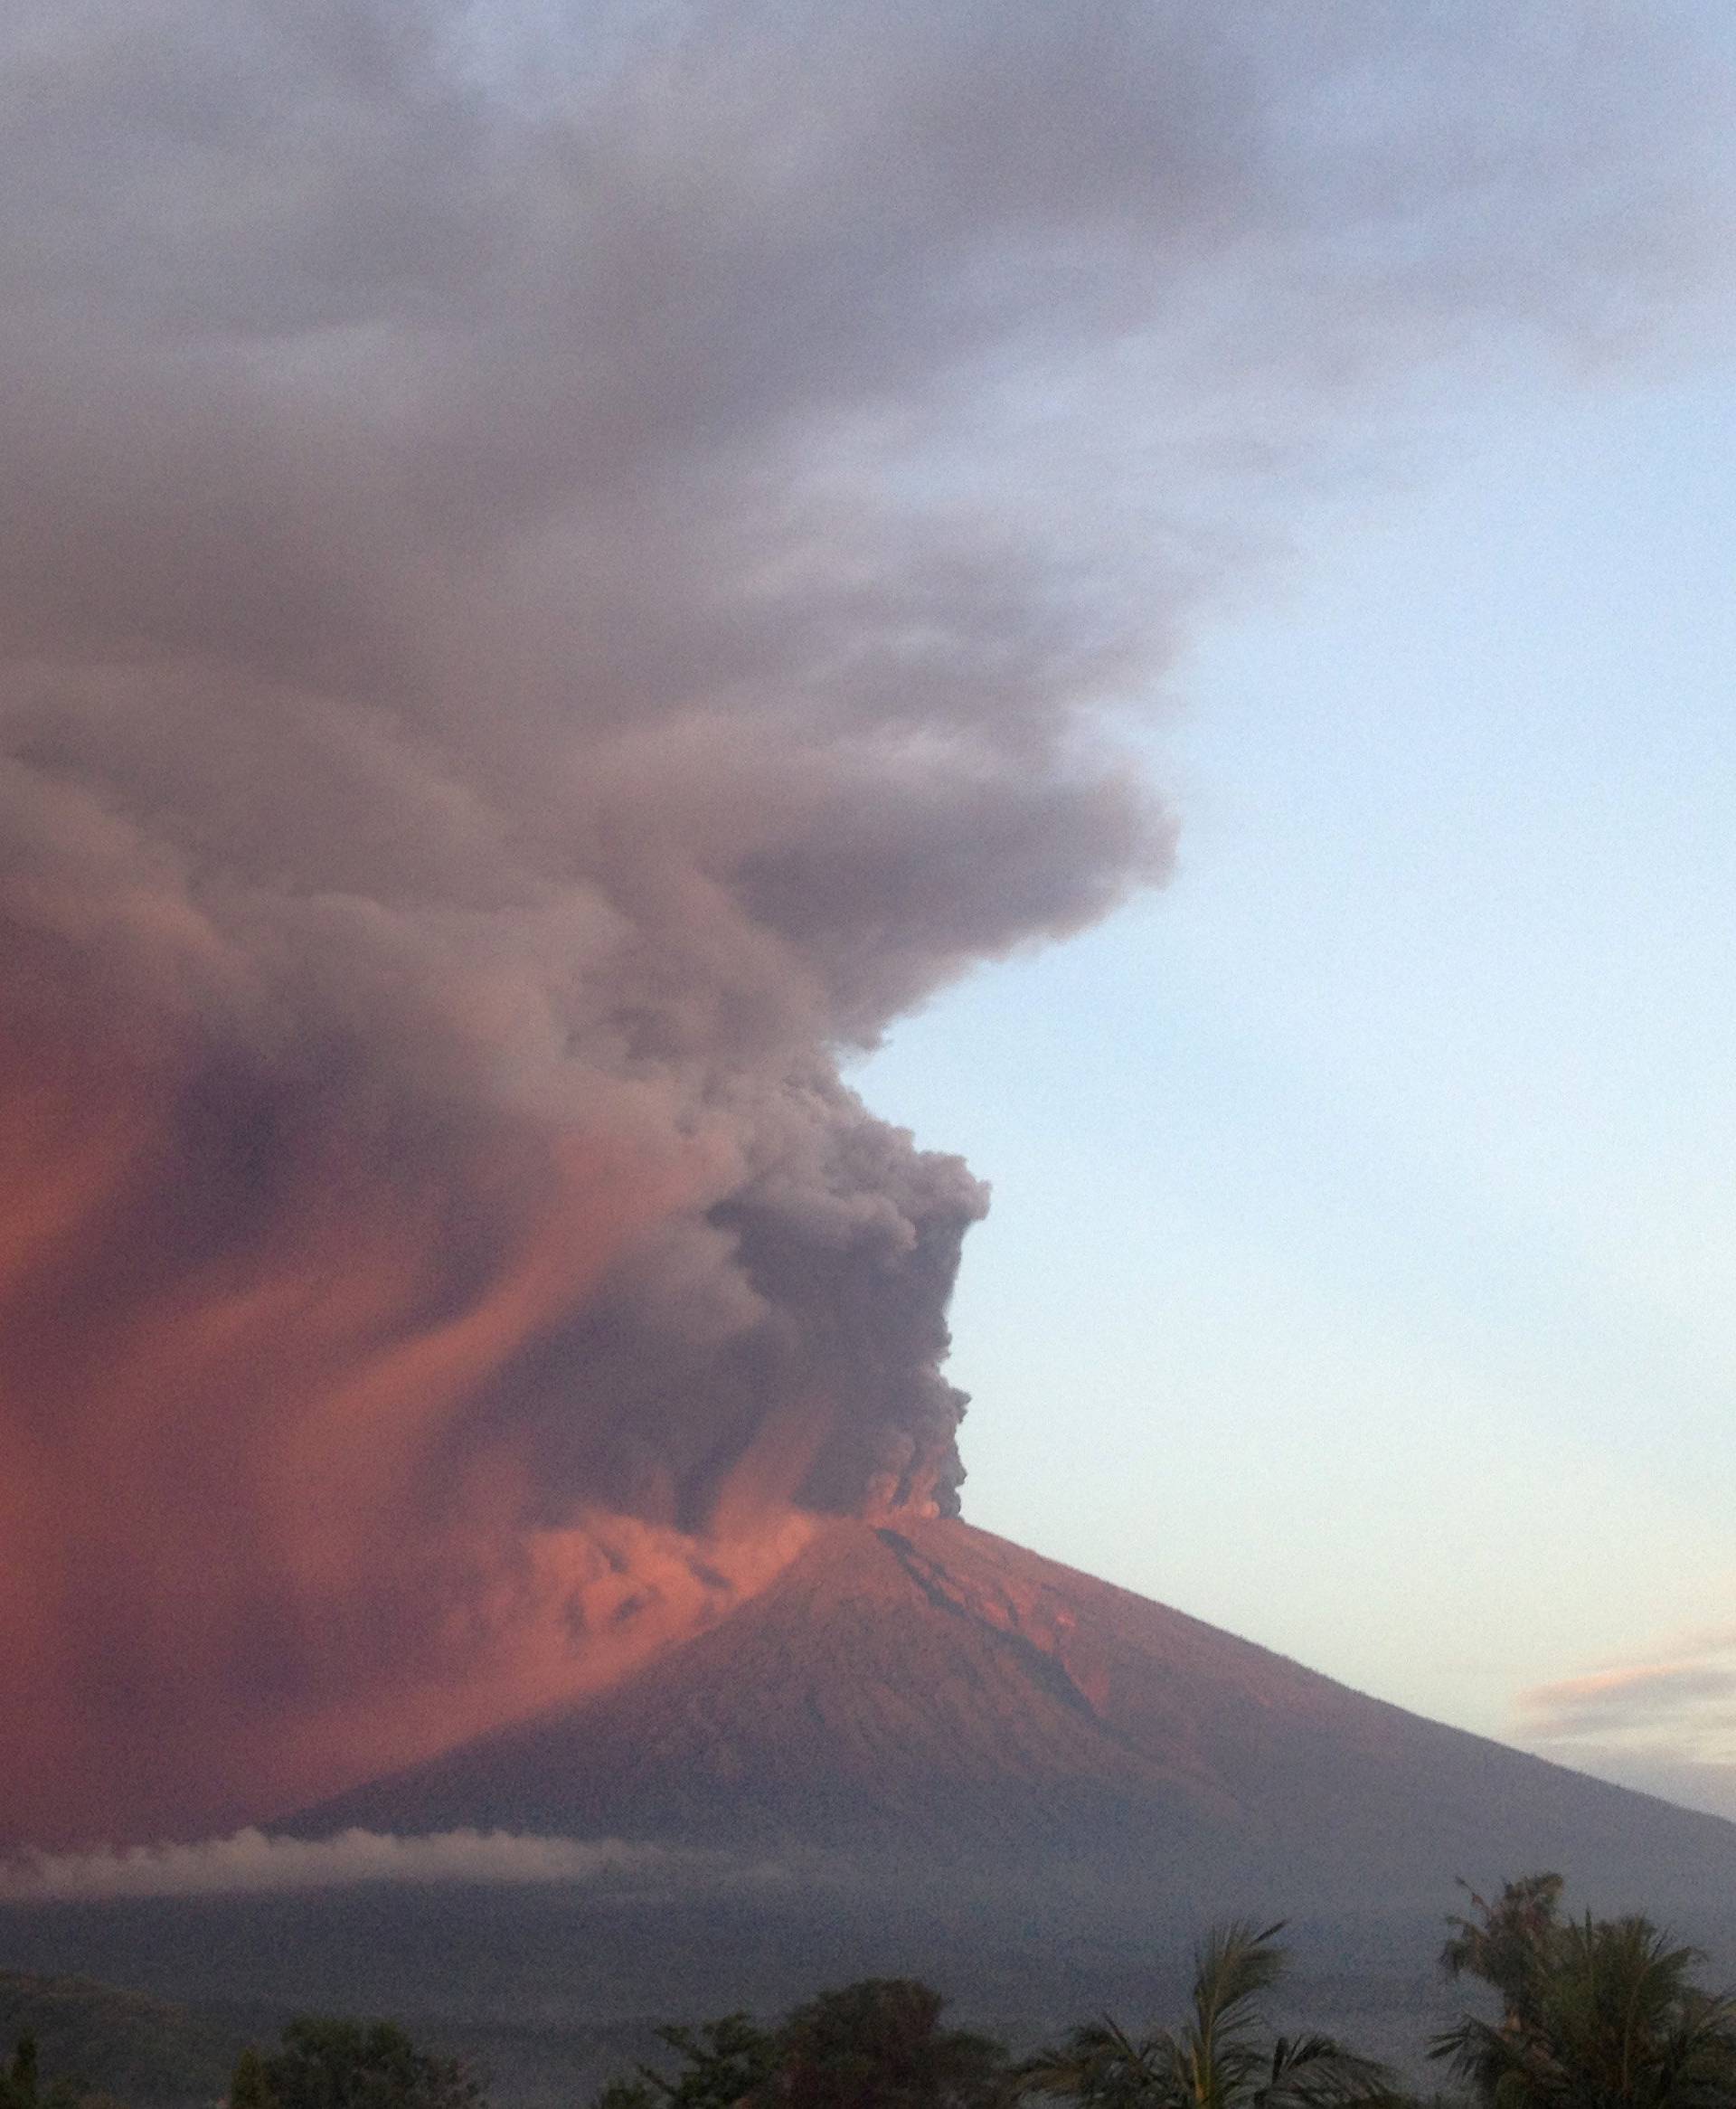 Indonesia's Mount Agung volcano erupts as seen from Amed, Karangasem, Bali